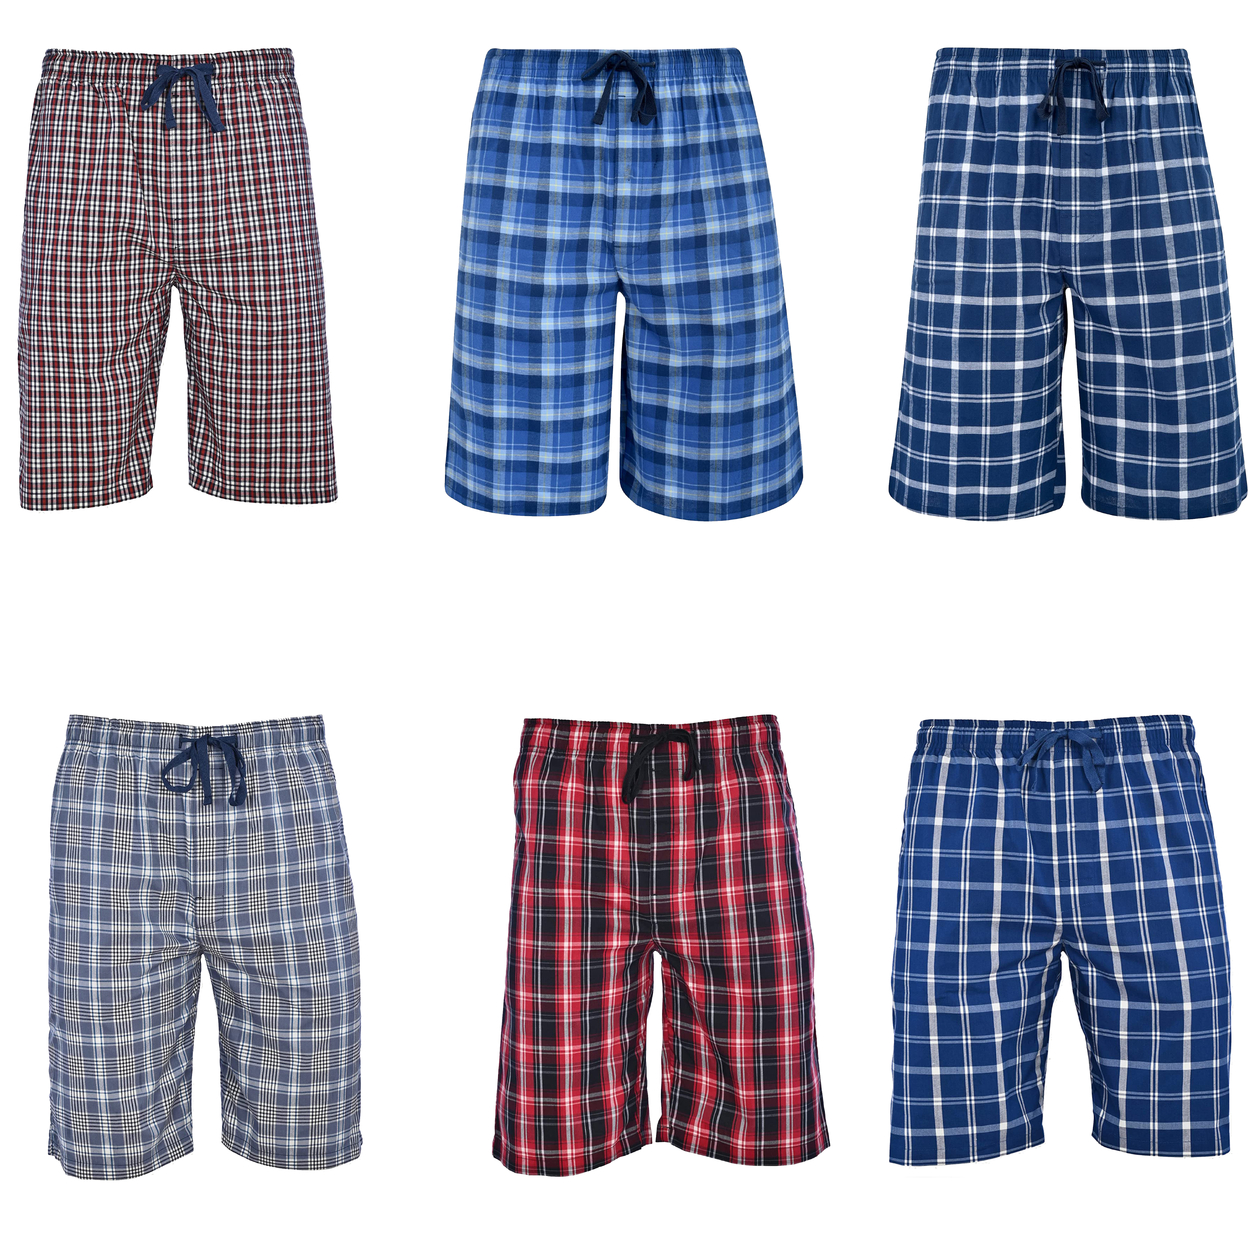 2-Pack: Men's Ultra Soft Plaid Lounge Pajama Sleep Wear Shorts - Red & Tan, Medium